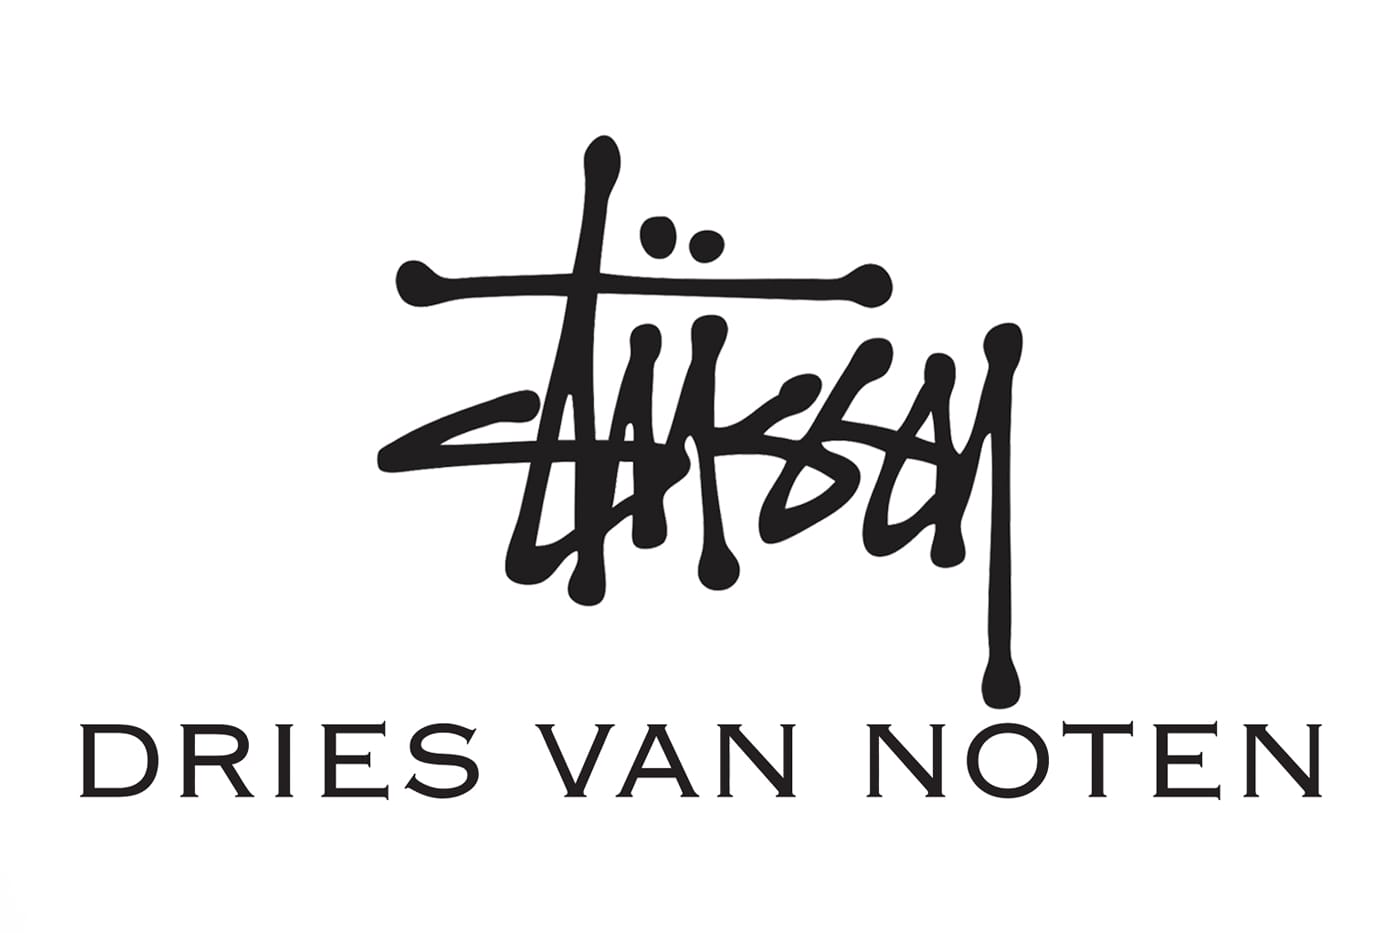 Stüssy and Dries Van Noten collaboration teaser | Hypebeast